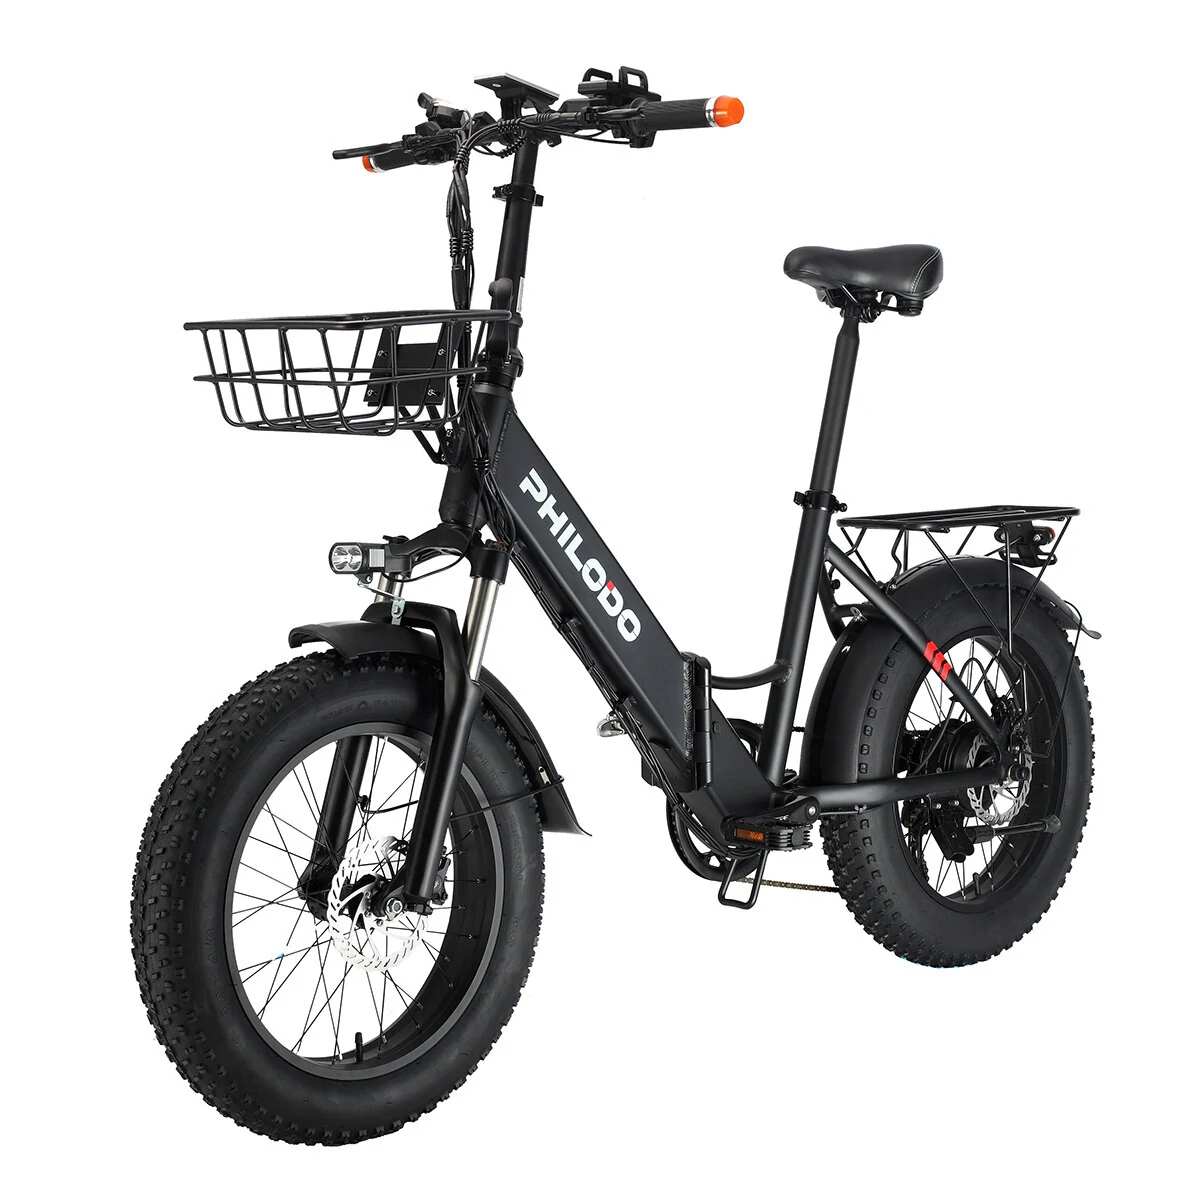 HILODO H4 250W 48V Tire Electric Bicycle Banggood Coupon Promo Code (CZ Warehouse)